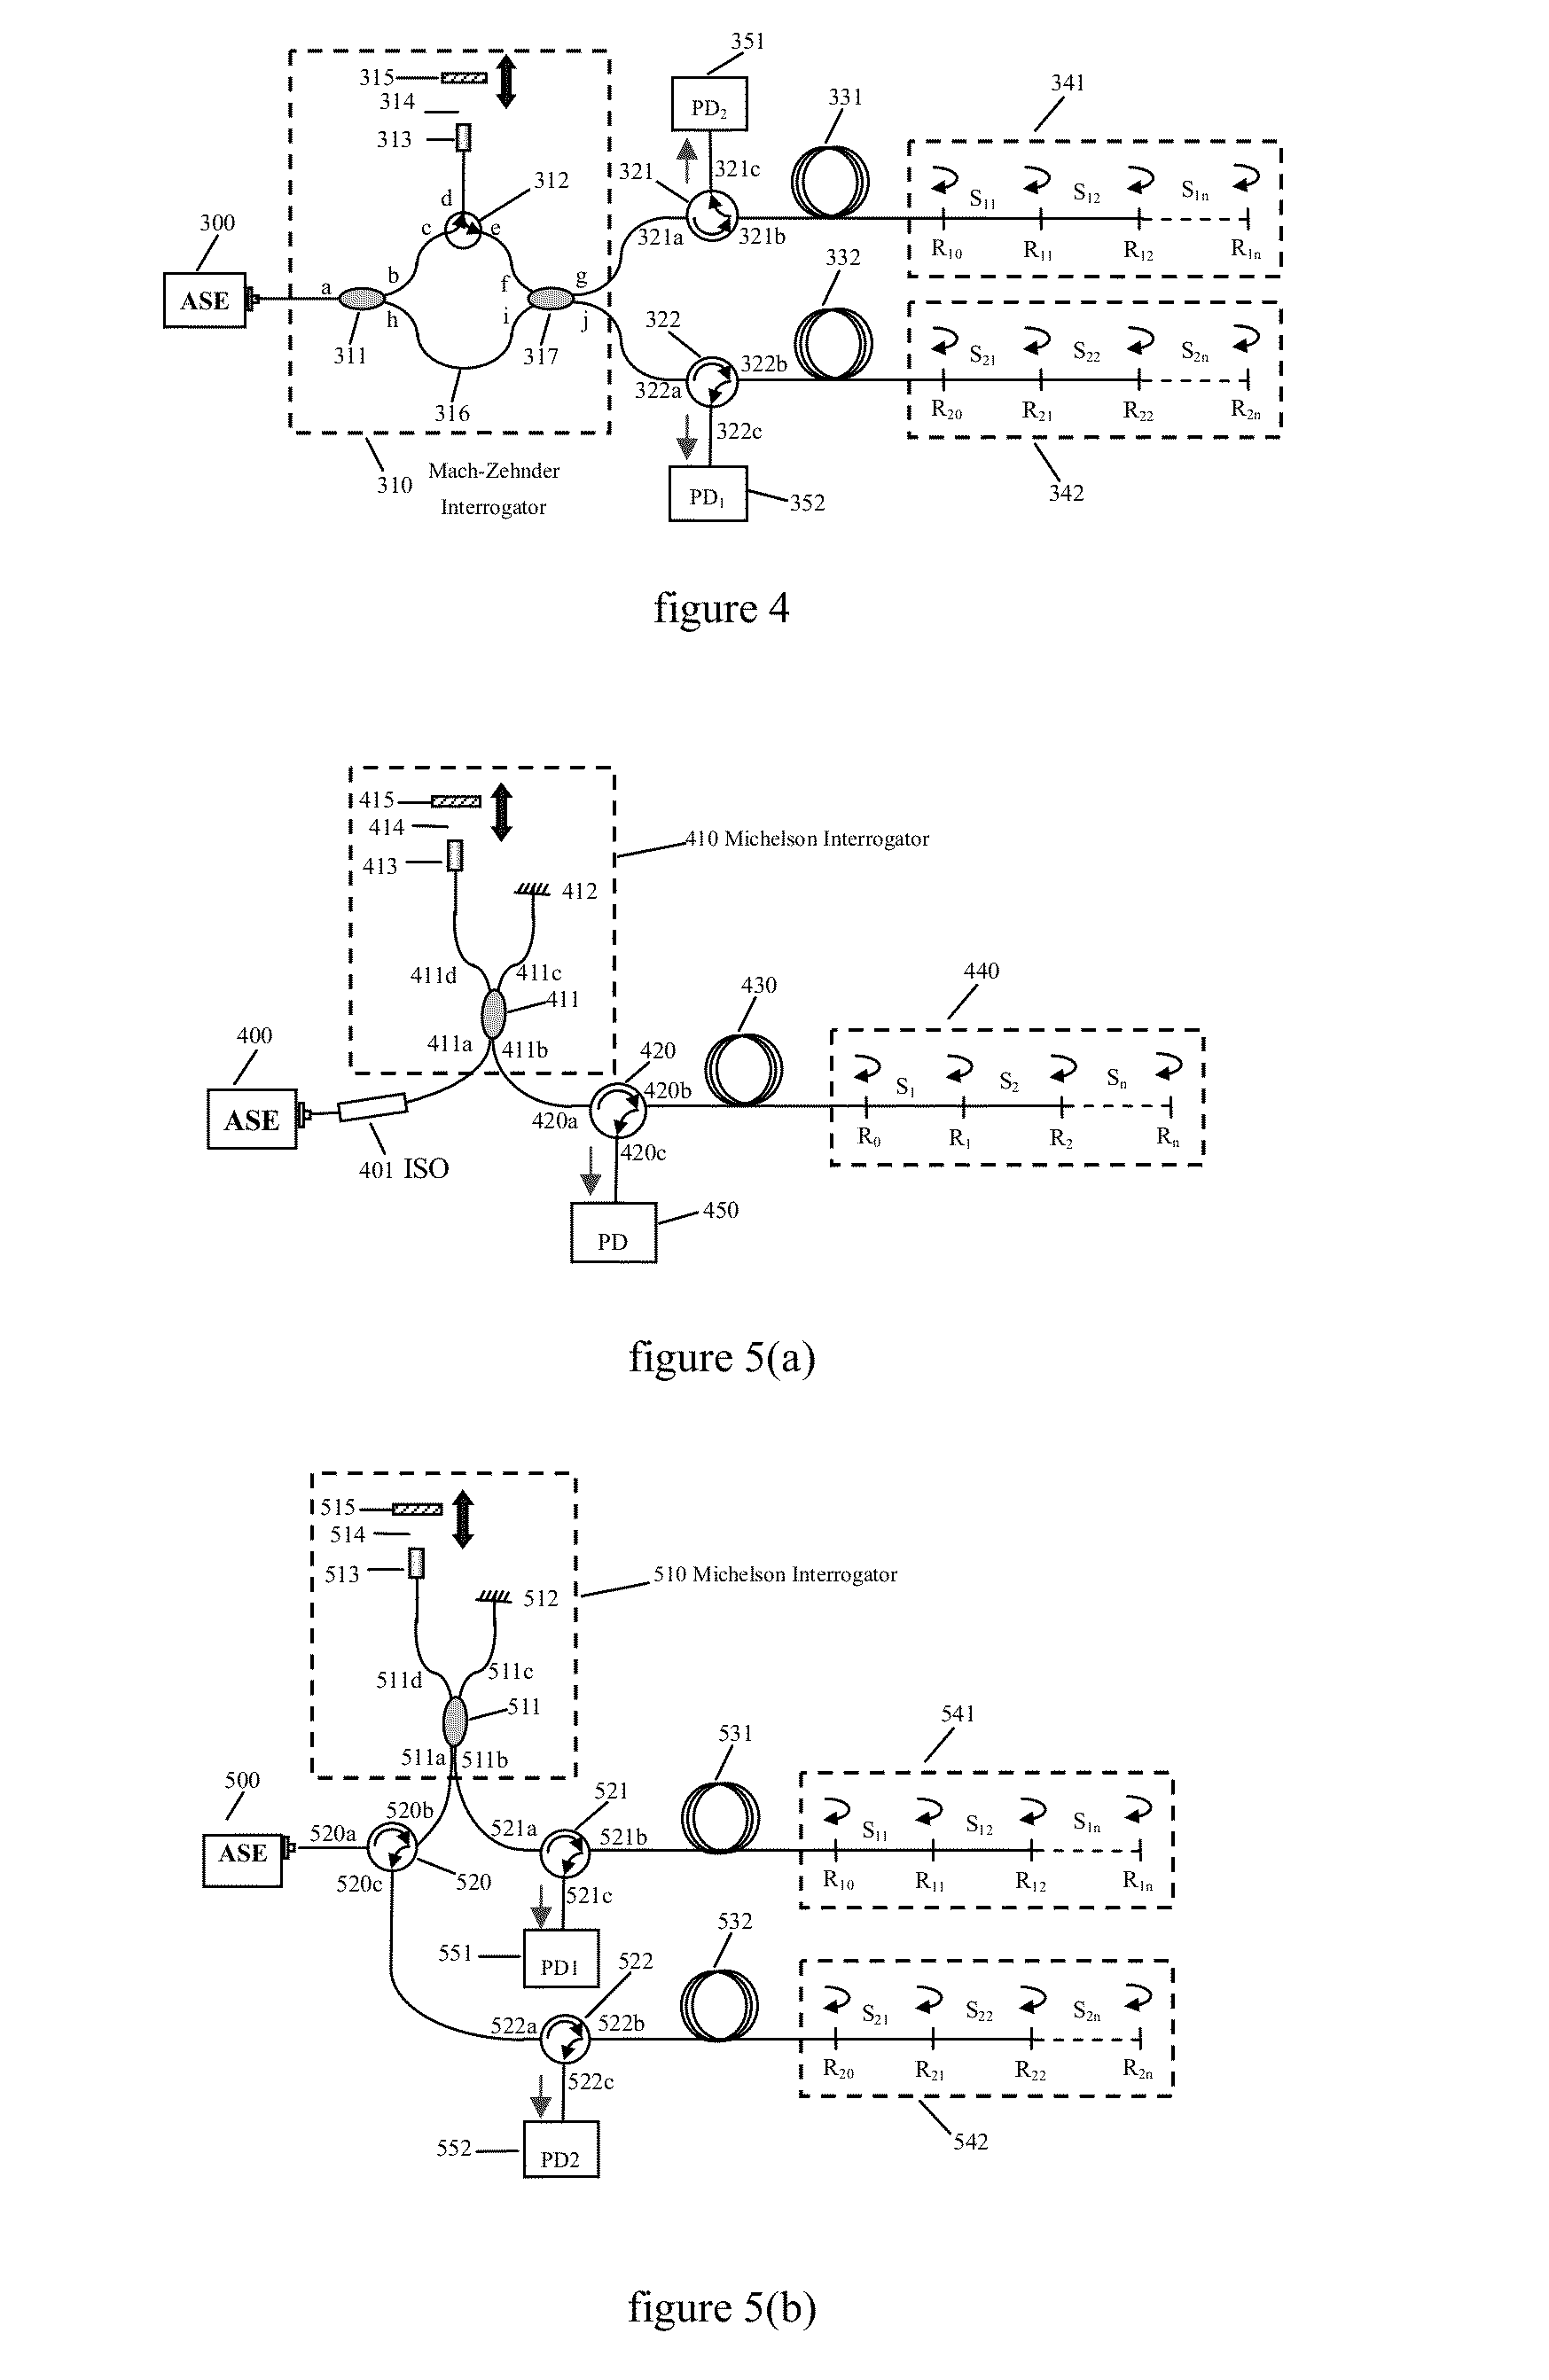 Multiple Optical Channel Autocorrelator Based on Optical Circulator